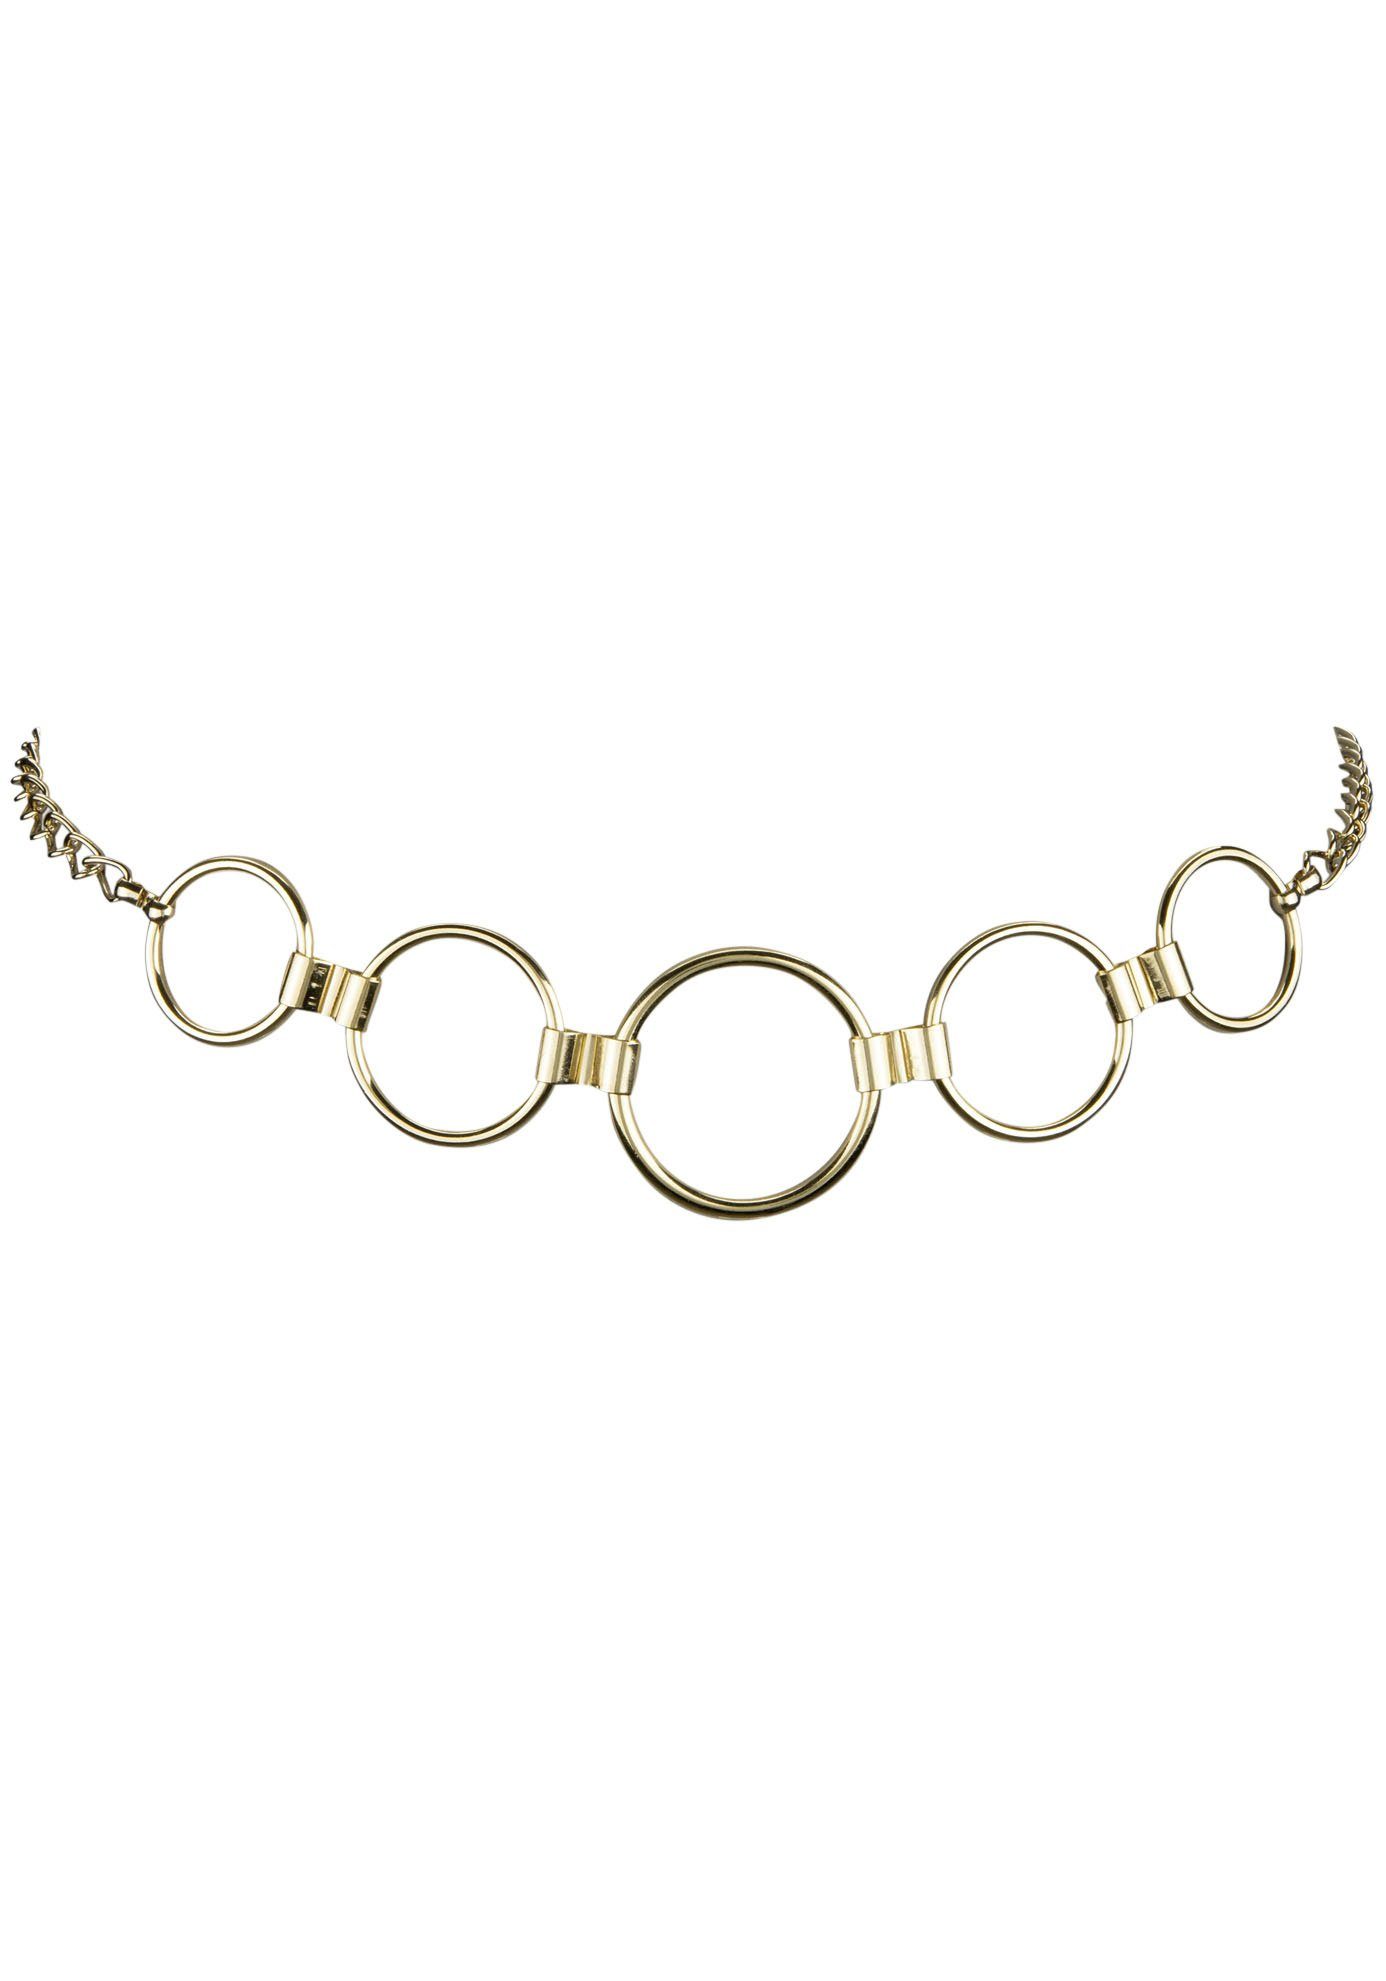 BERND GÖTZ Kettengürtel in elegant abgestuftem Ringdesign goldfarben